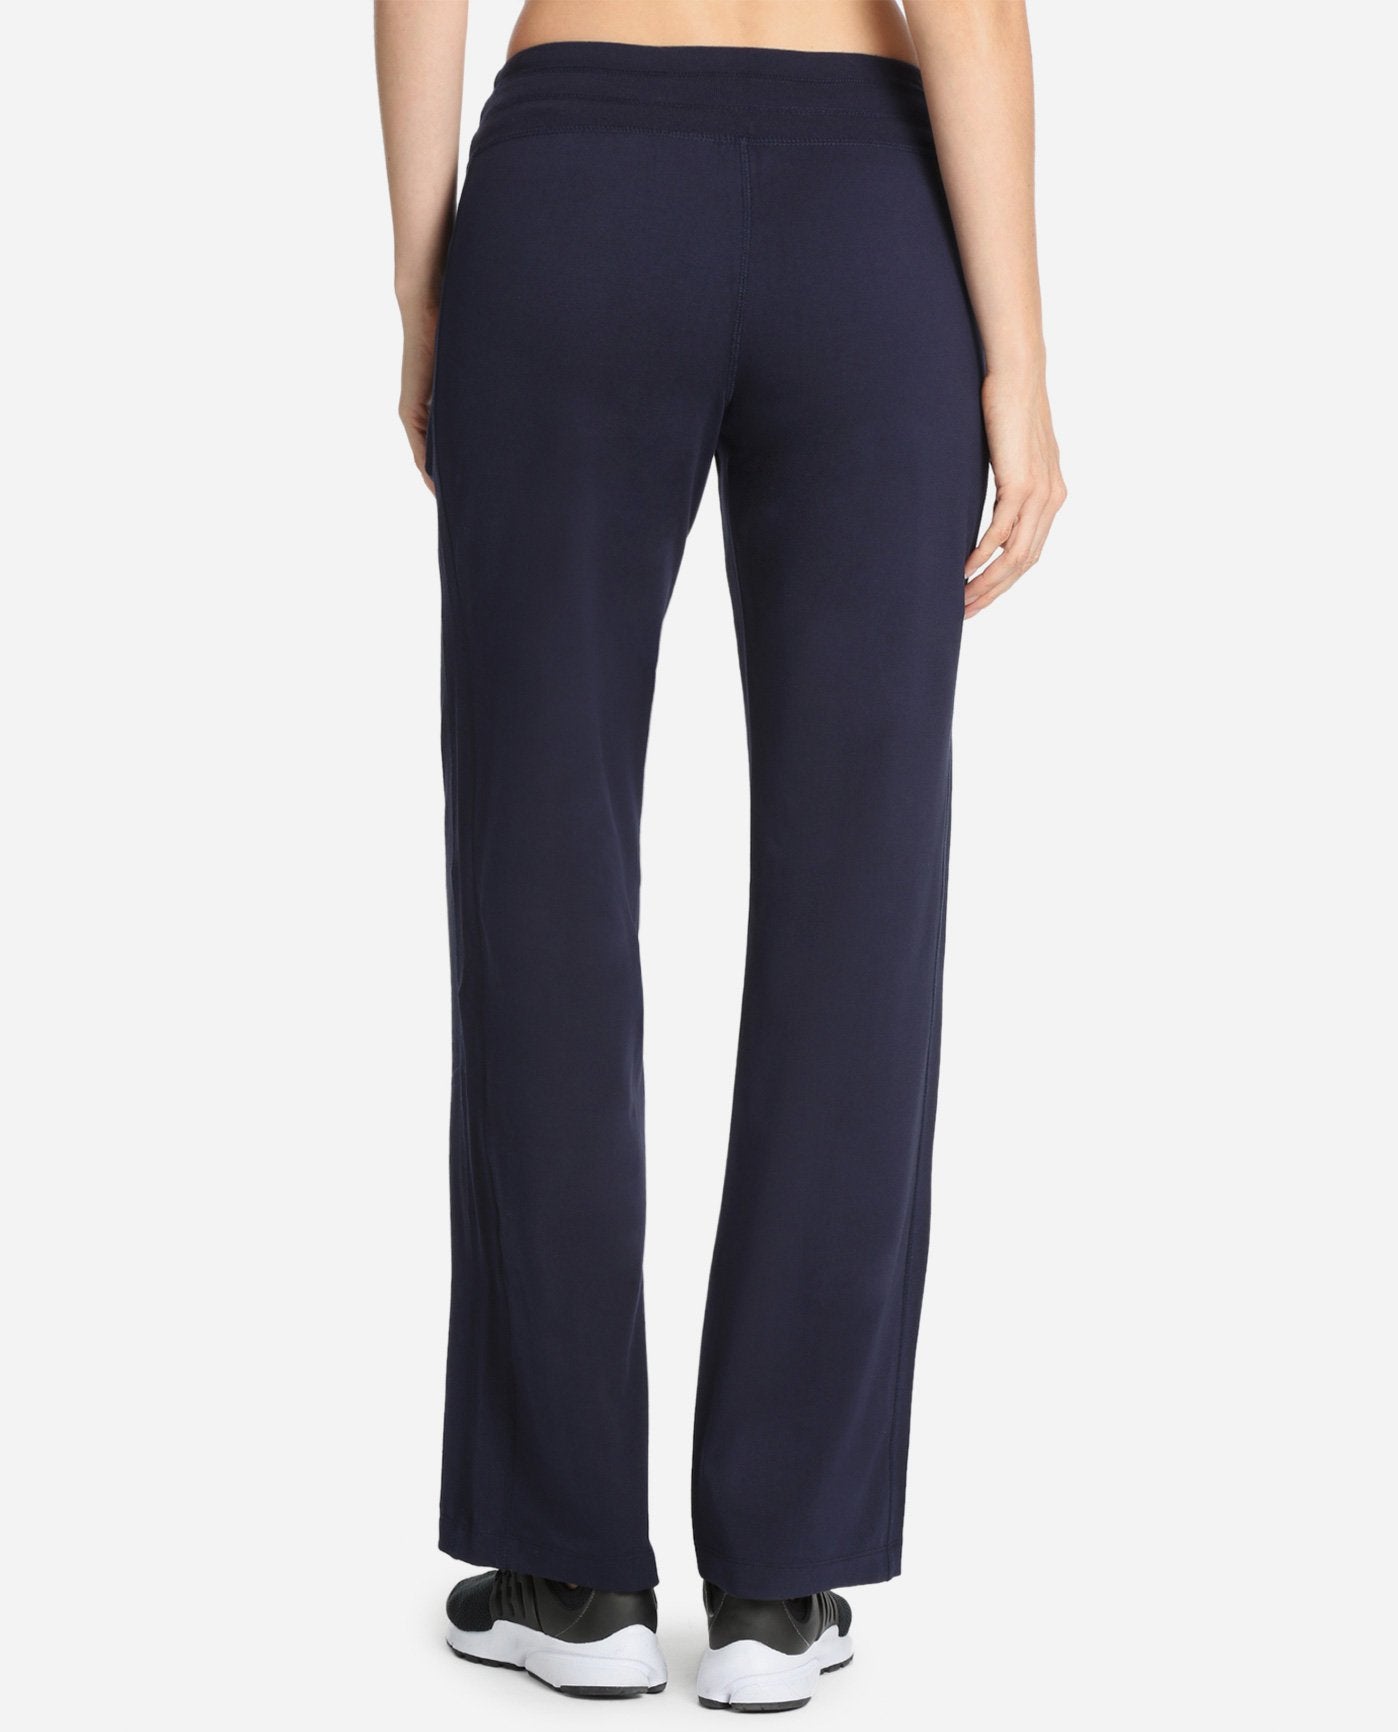 Women's Danskin Pants - at $12.75+